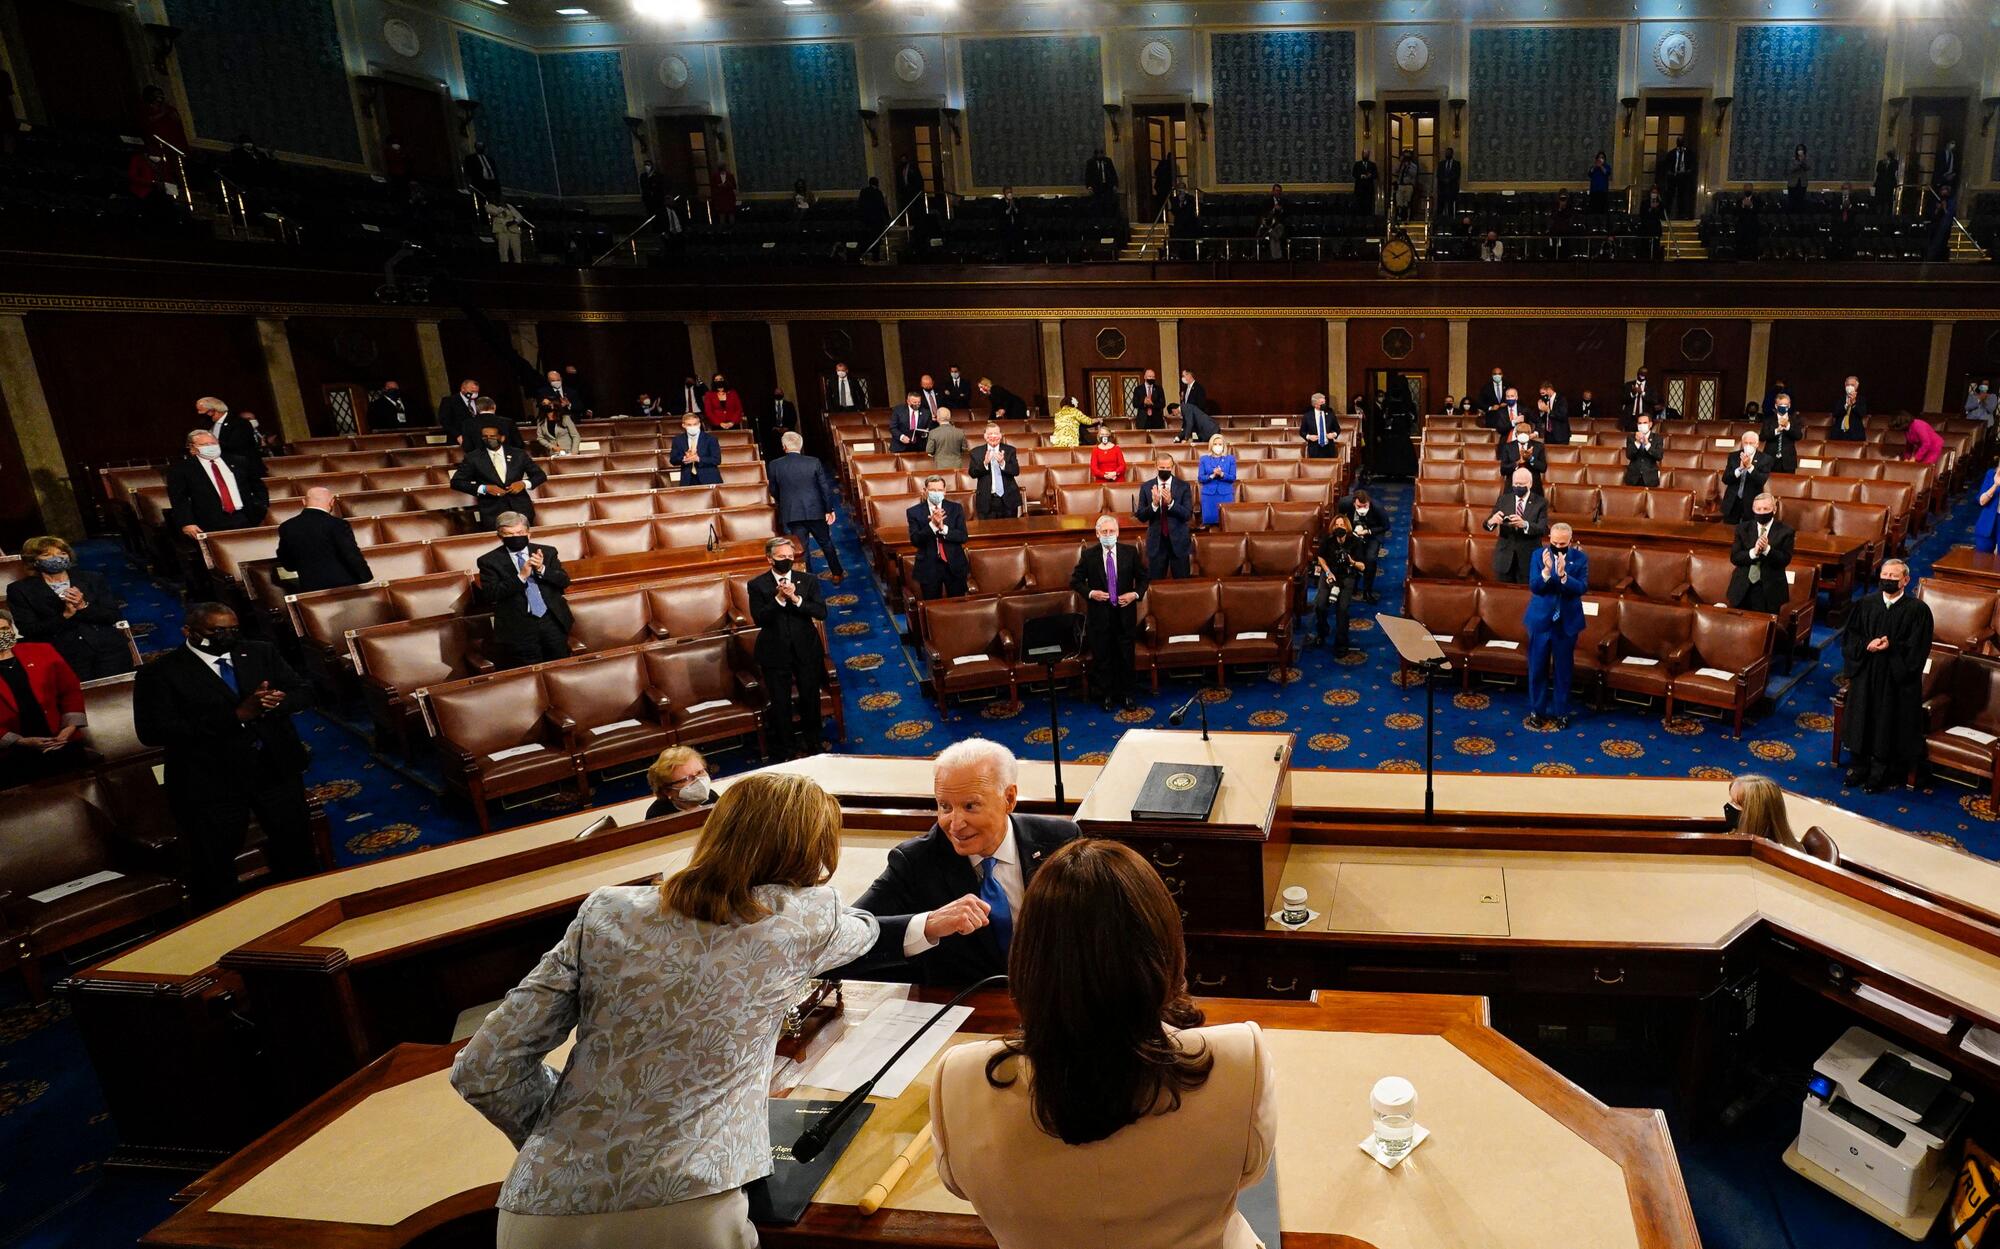 President Joe Biden bump elbows with Speaker of the House Nancy Pelosi after his address.